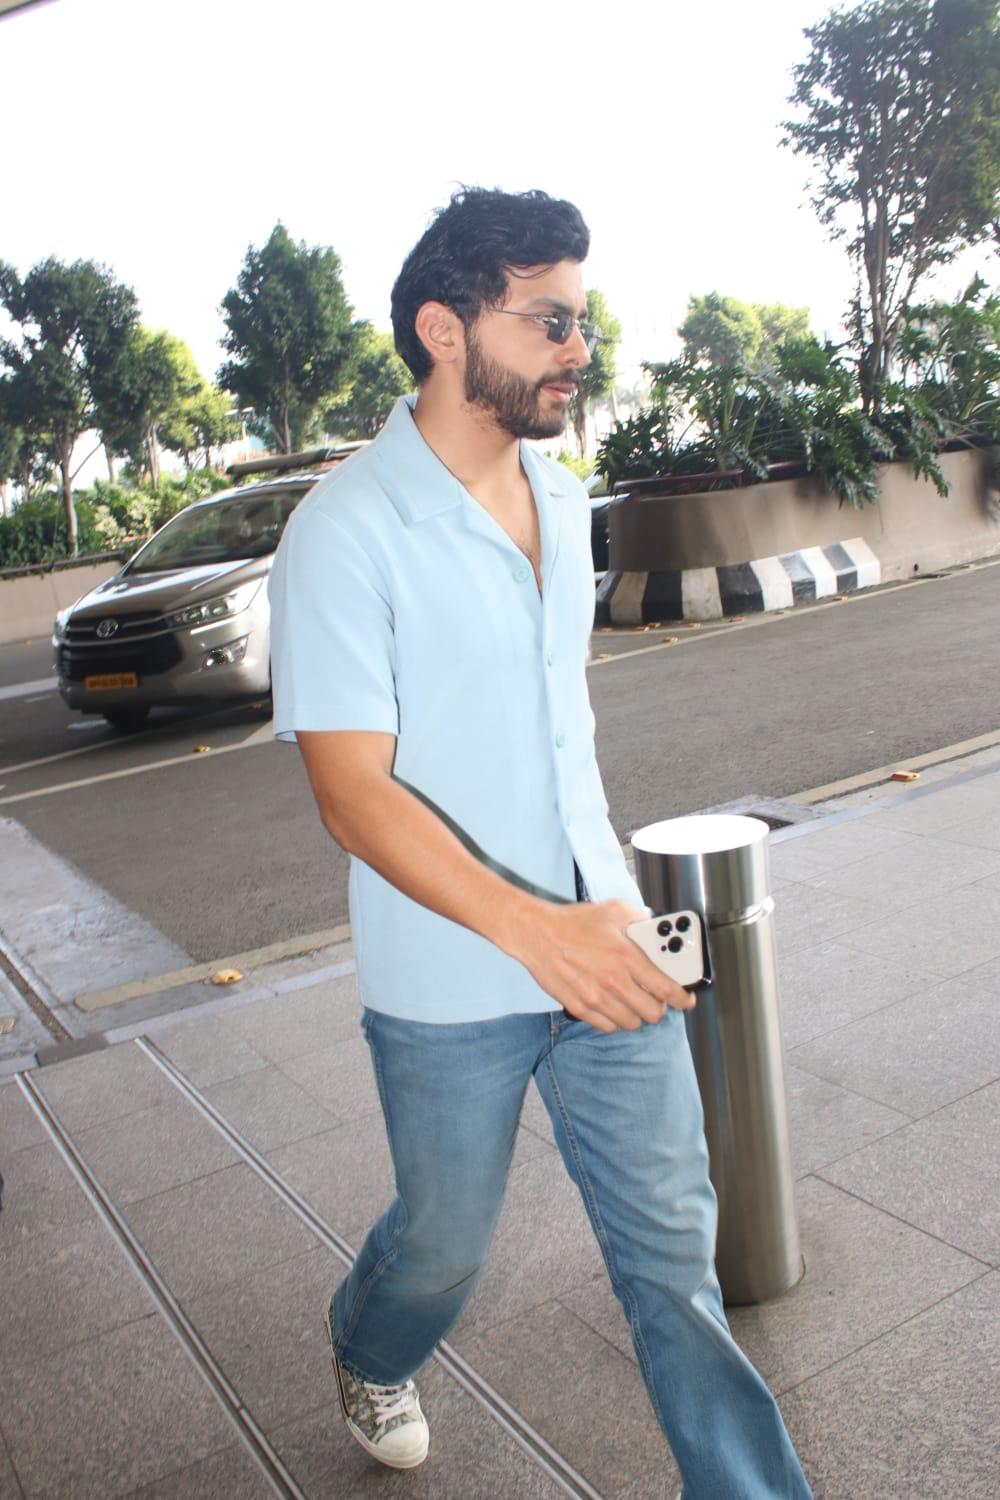 Janhvi Kapoor's rumoured boyfriend Shikhar Pahariya was spotted at the airport this morning